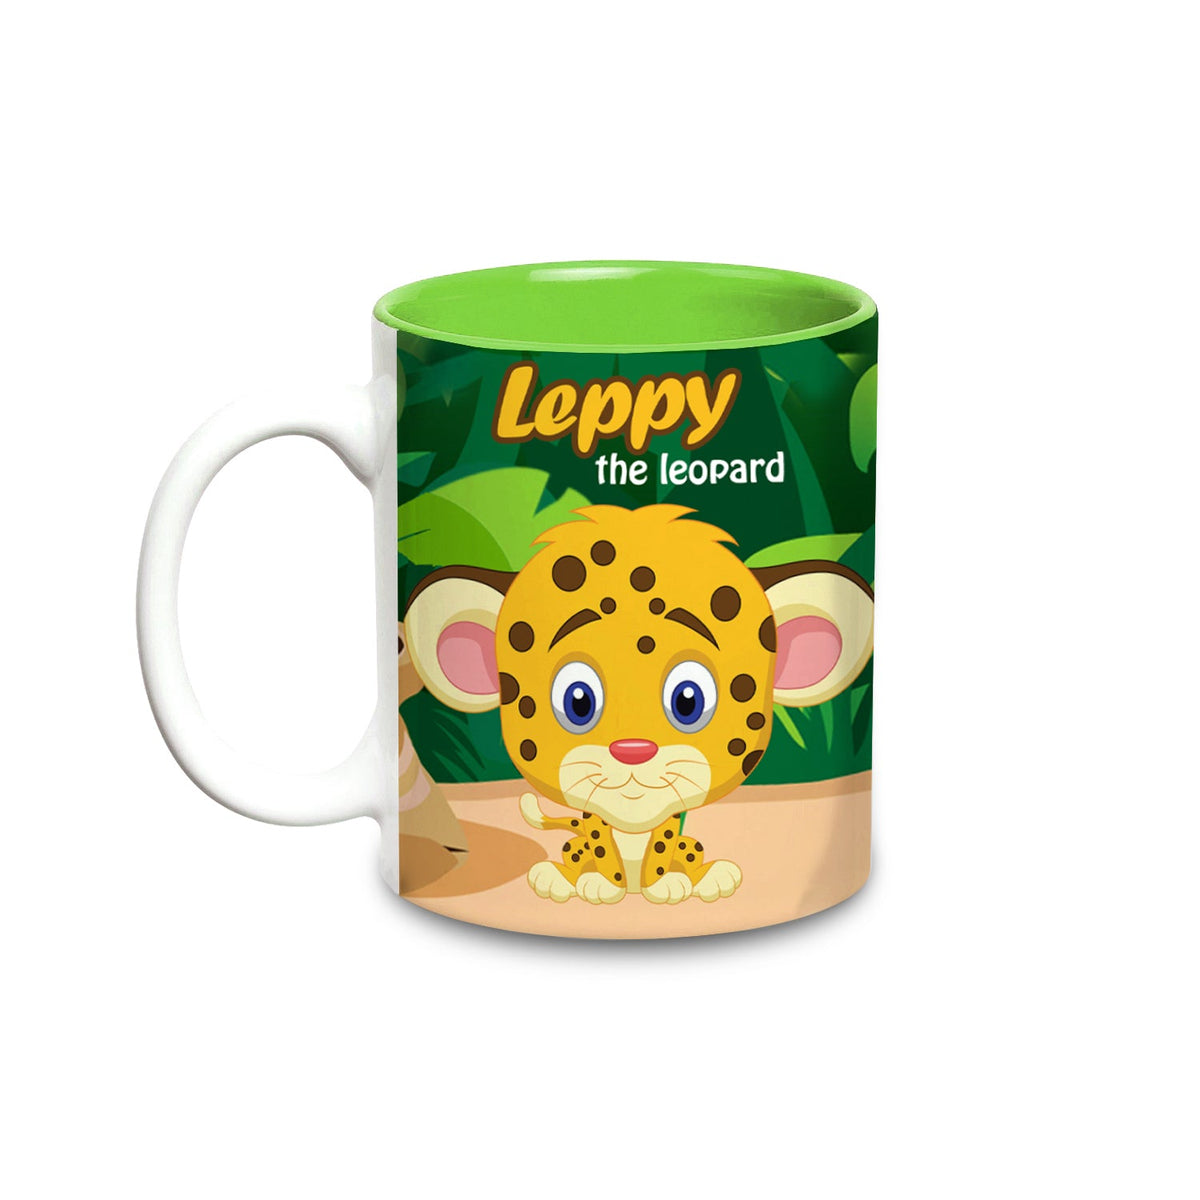 Wild Focus Kids -Leppy the Leopard Mug, 1pc